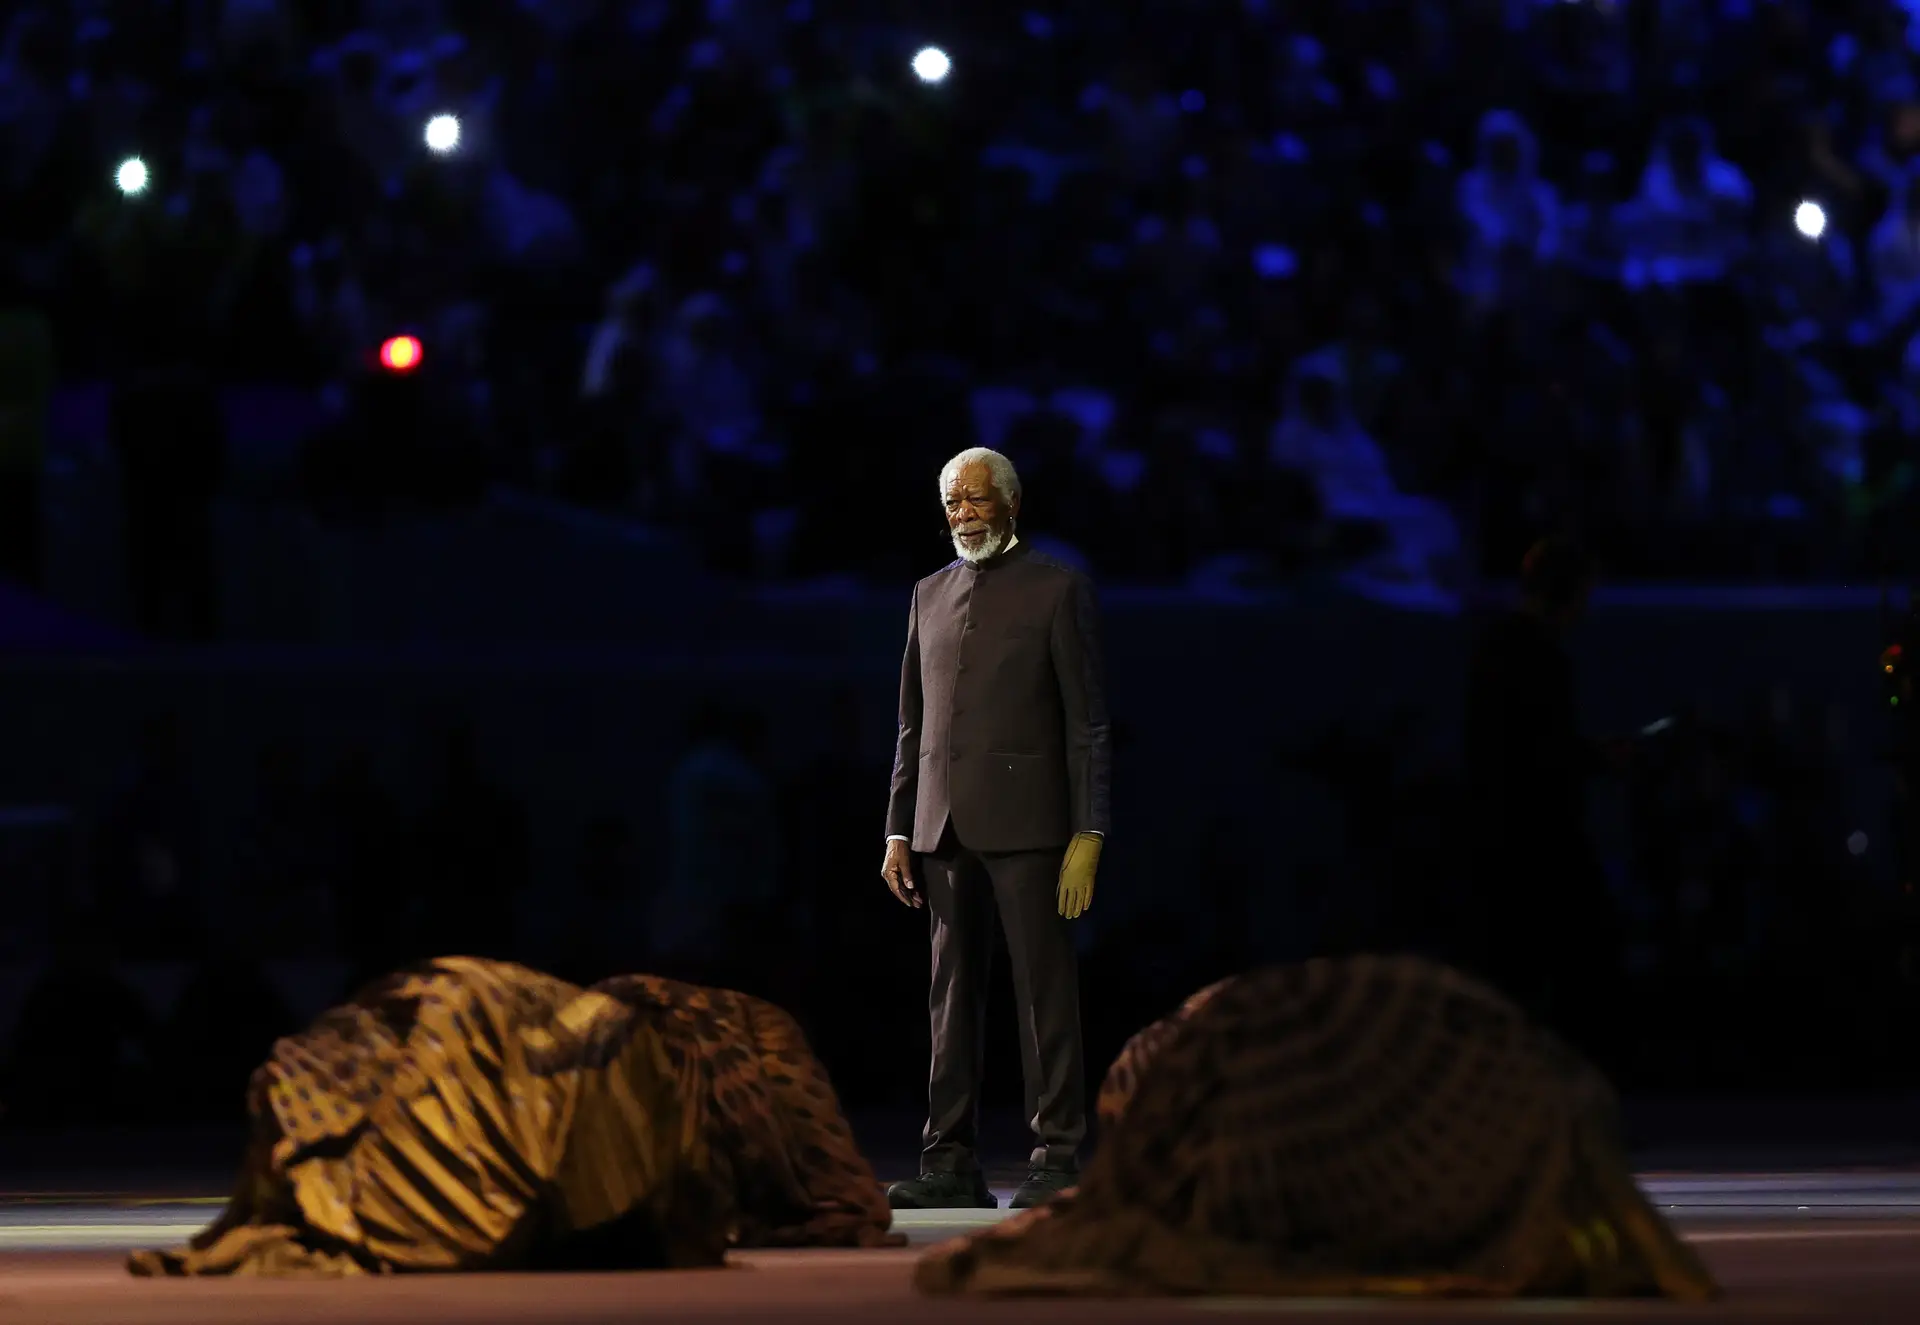 Esclarecido mistério da luva de Morgan Freeman na cerimónia de abertura do Mundial